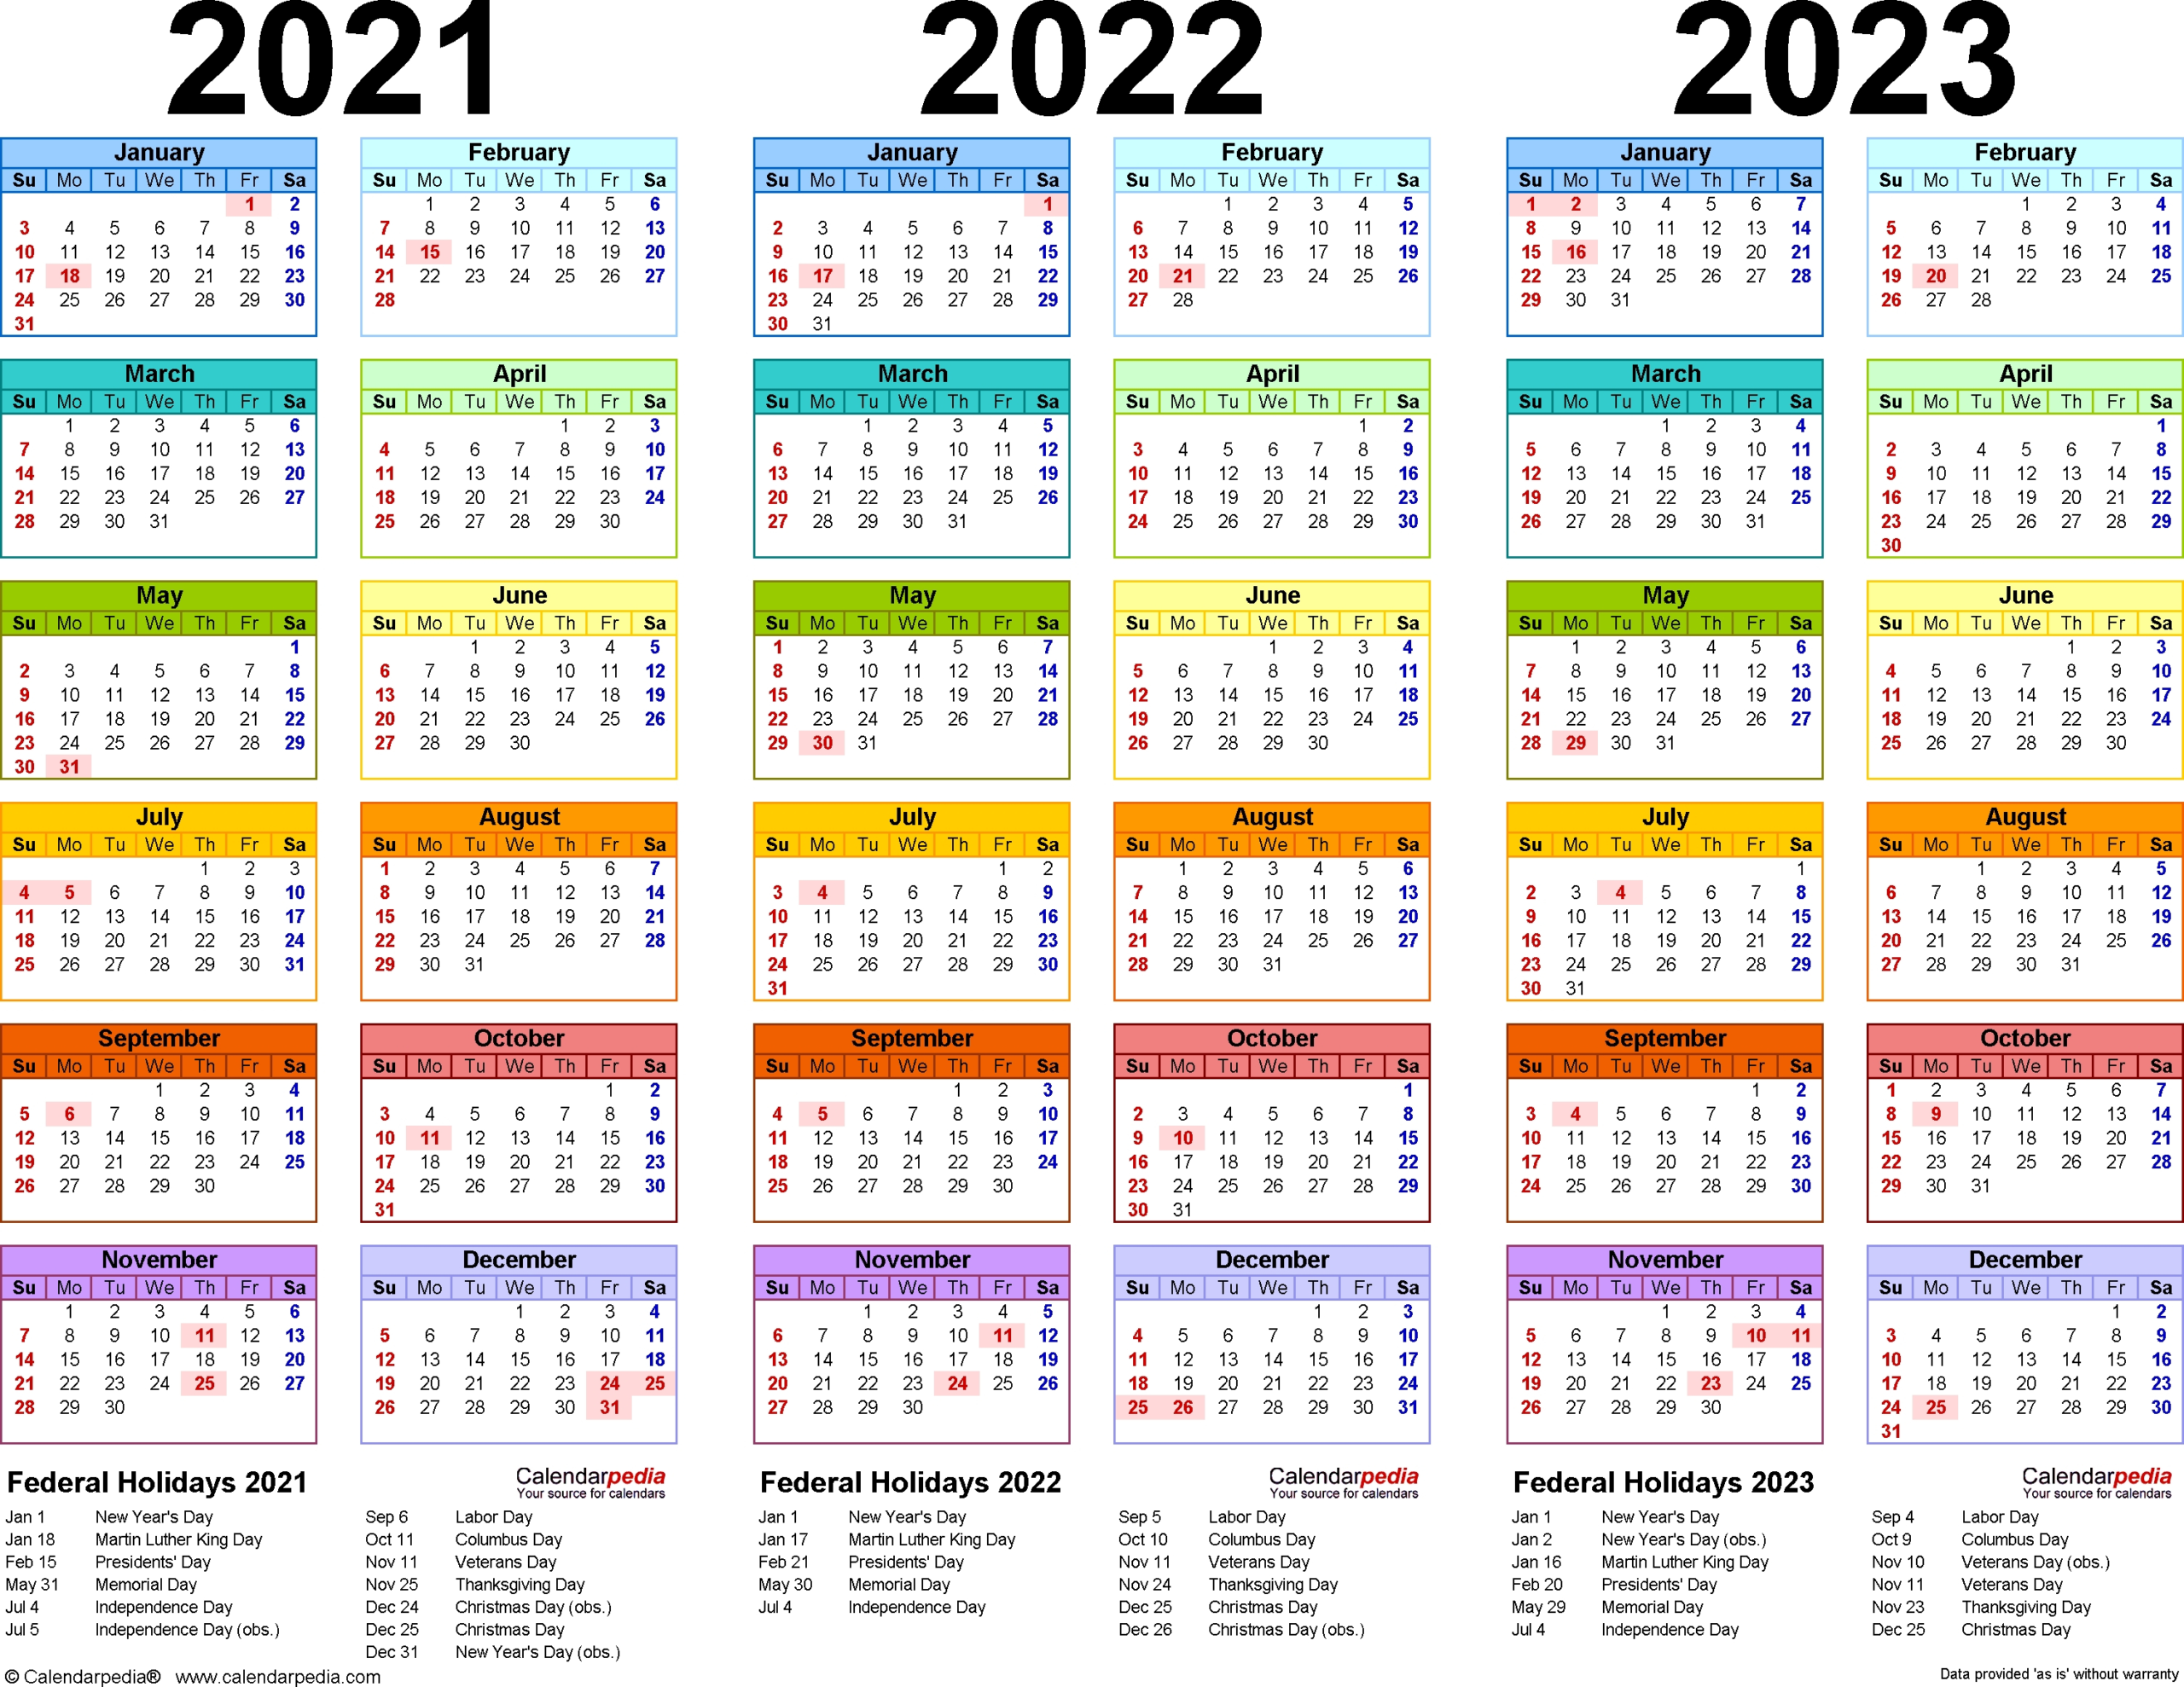 Print 2019, 2020, 2021, 2022, 2023, Calender - Calendar